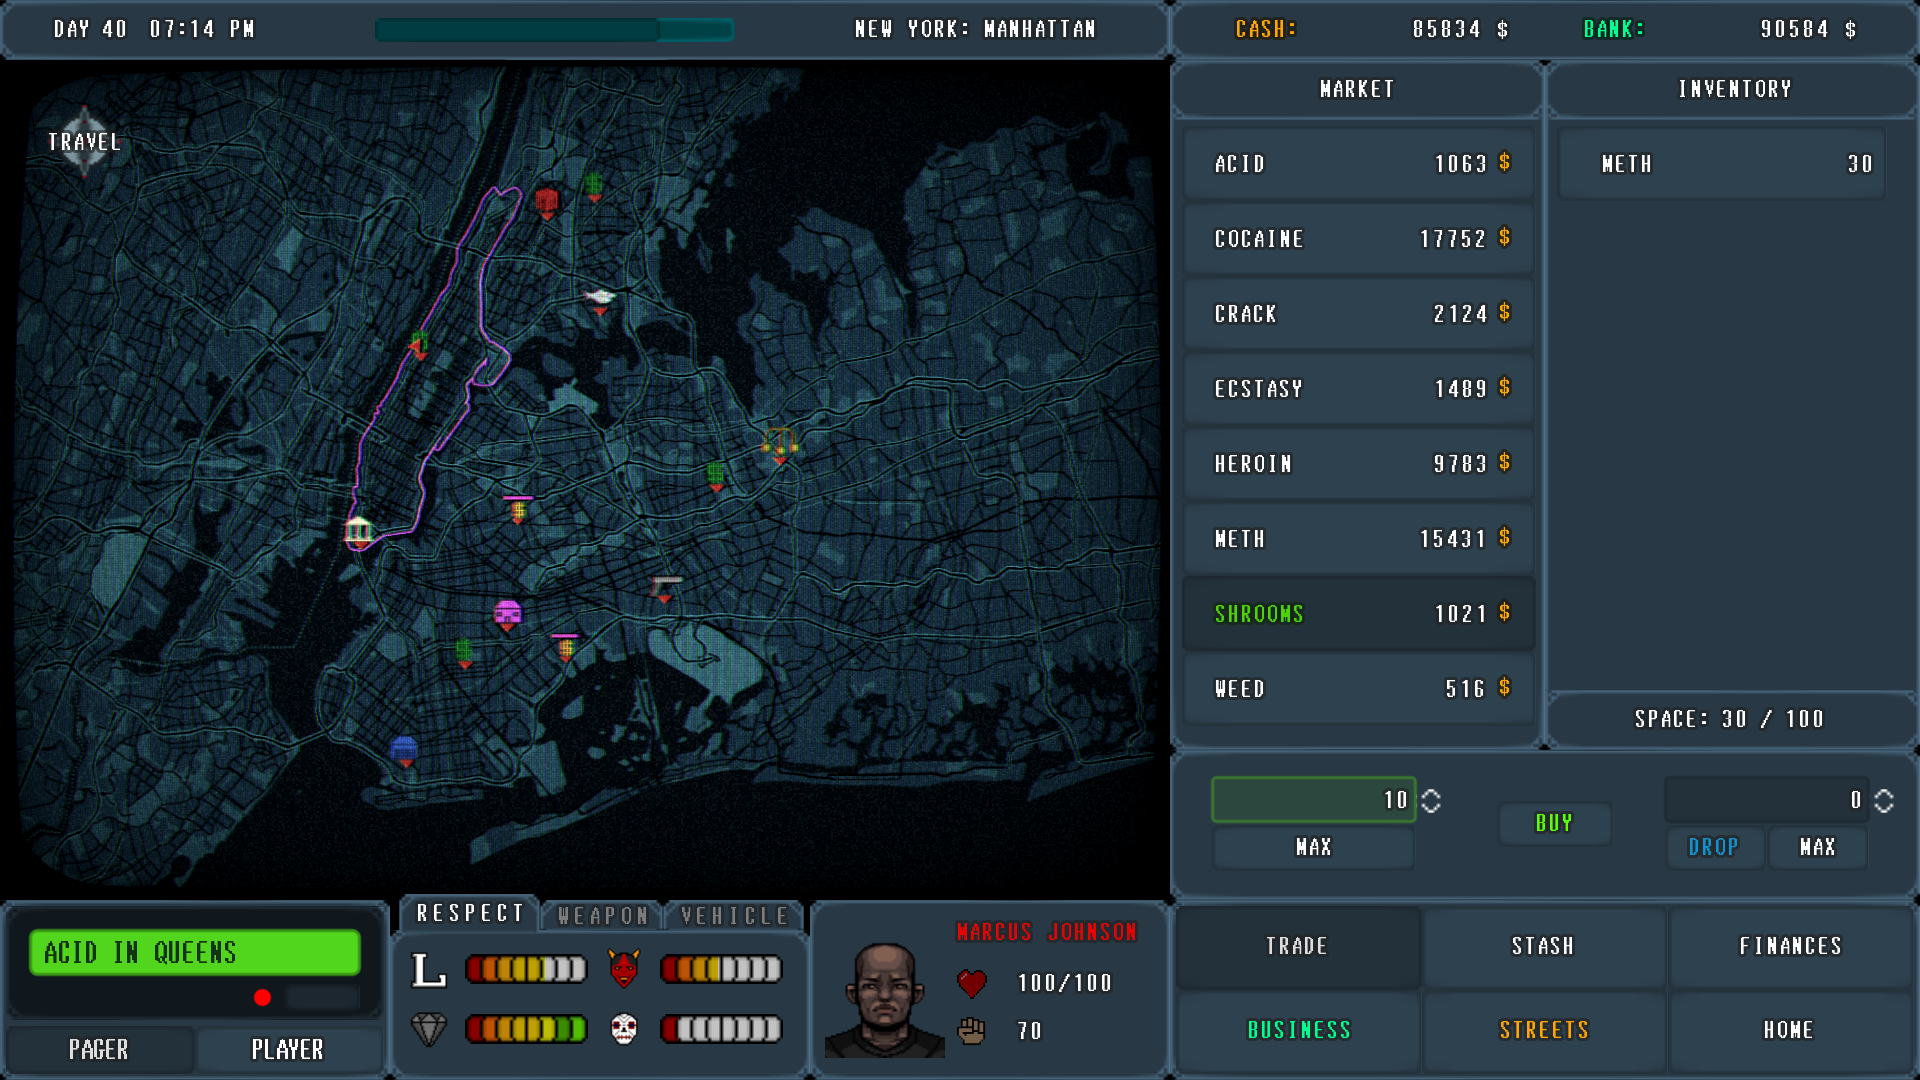 Screenshoot of game PUSHER - DRUG TYCOON showing trading panel